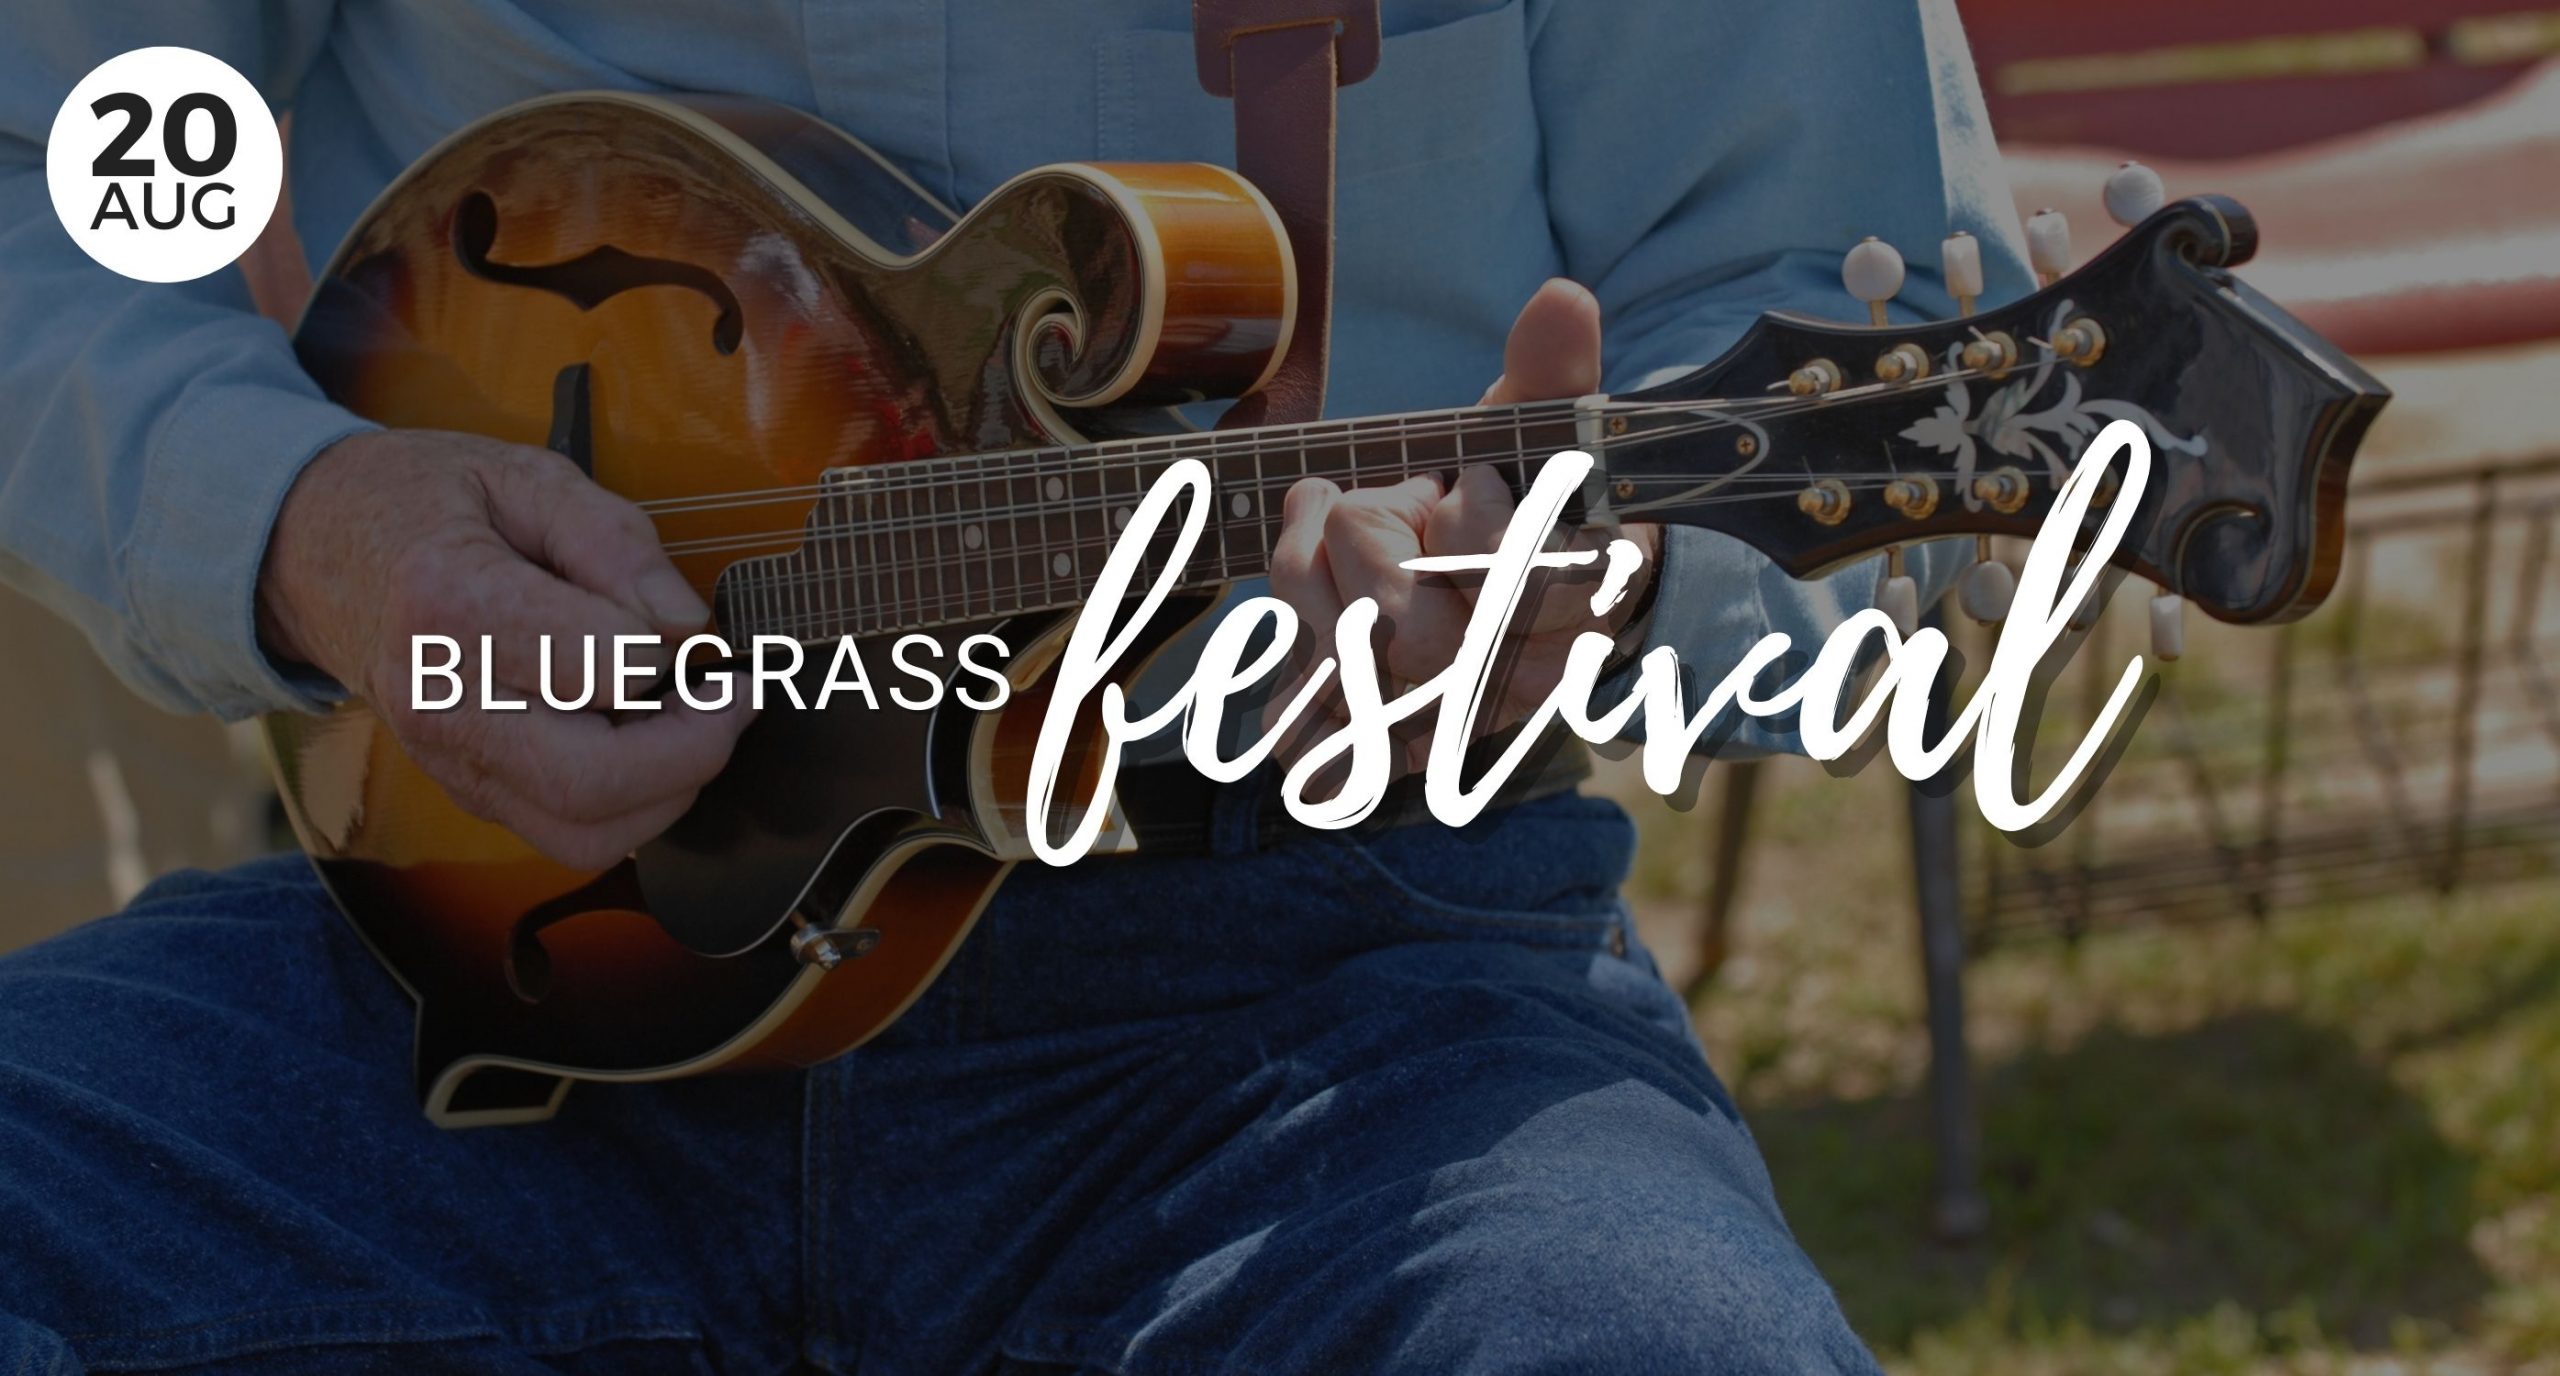 Bluegrass Festival, Meerkerk Gardens, Greenbank, Whidbey Island, Washington, Local events, community, gather together, festival, summer fun